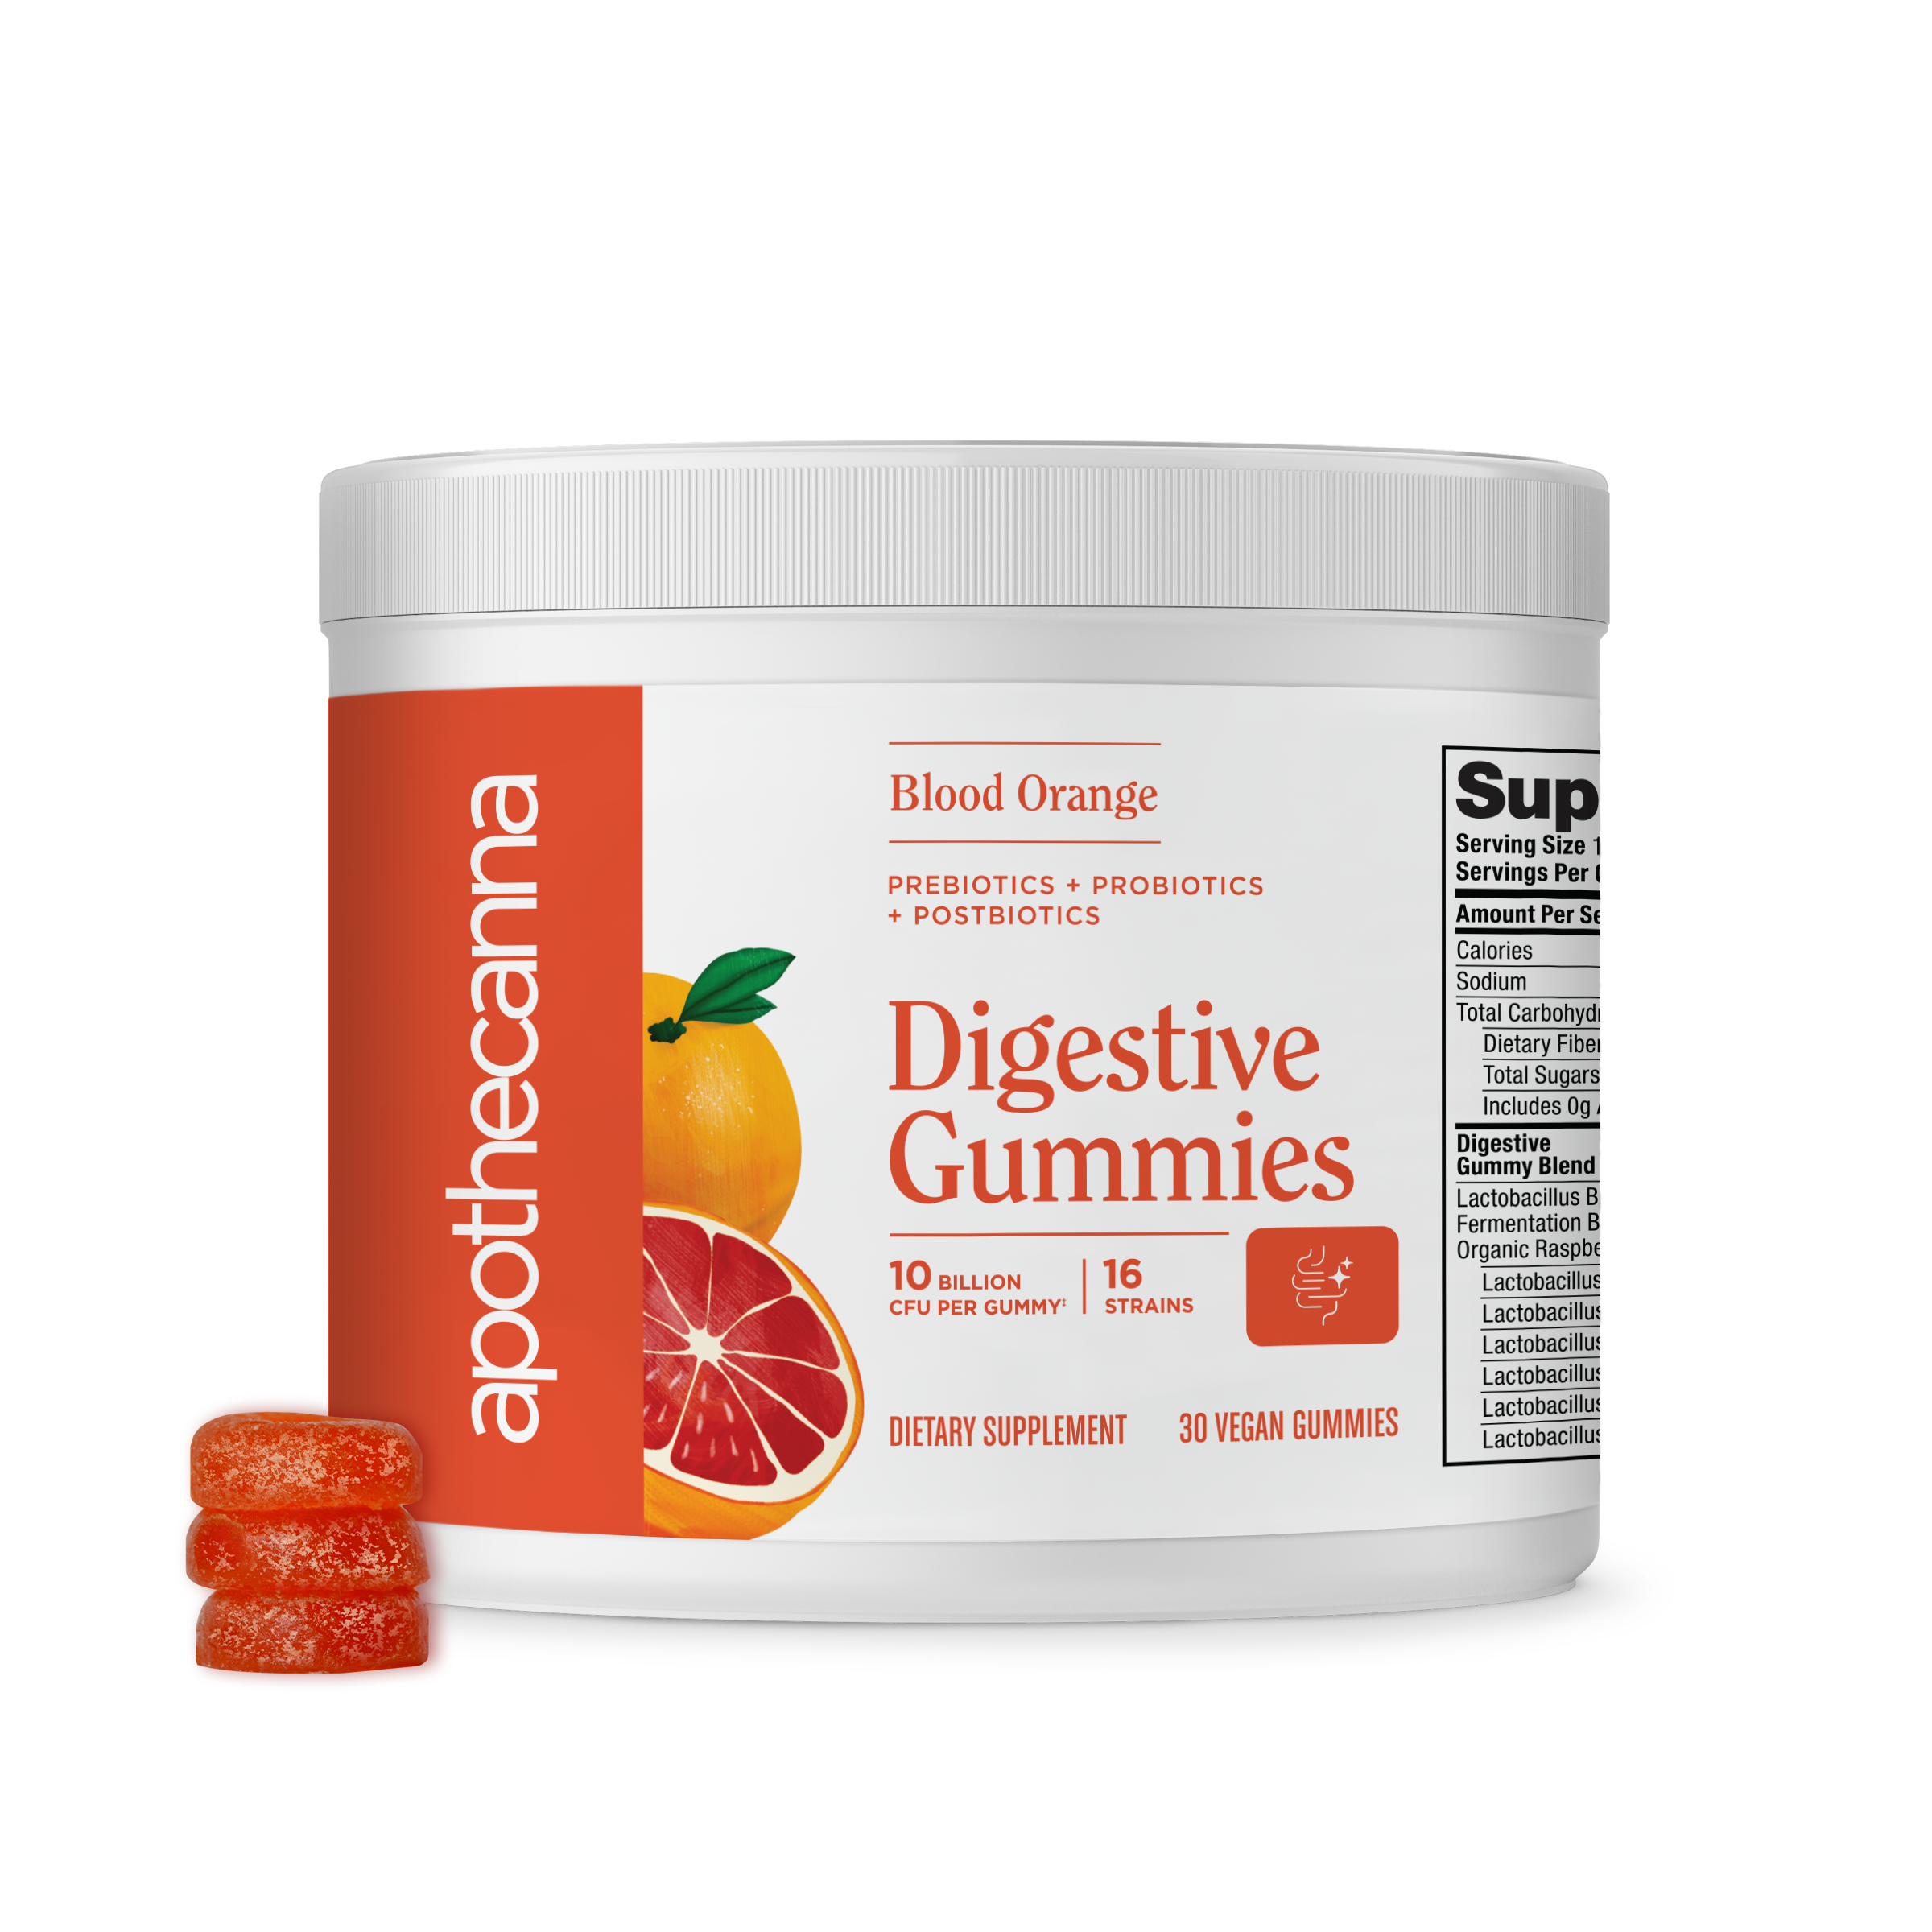 Digestive Gummies Blood Orange - 30 Count